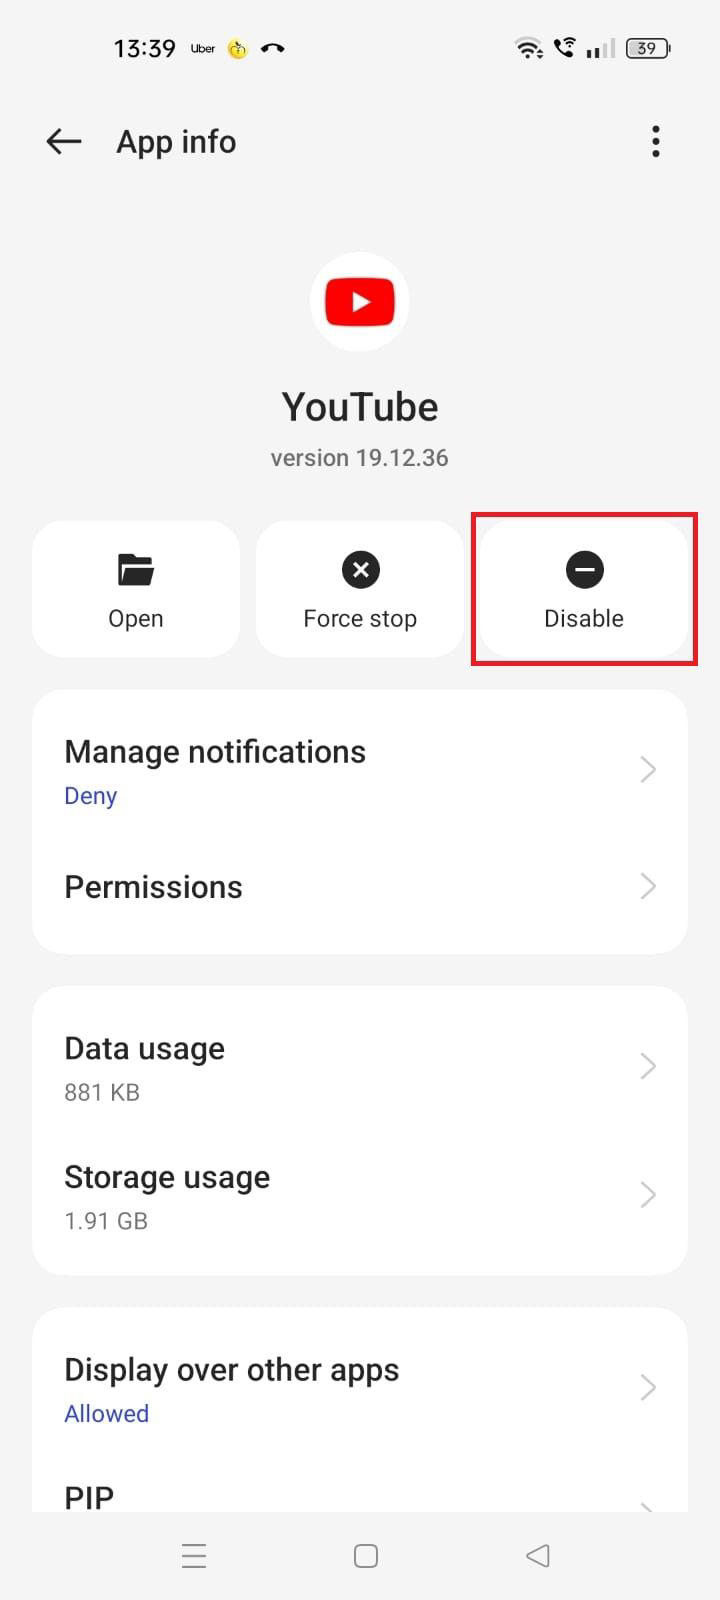 Screenshot highlighting the disable option under App info